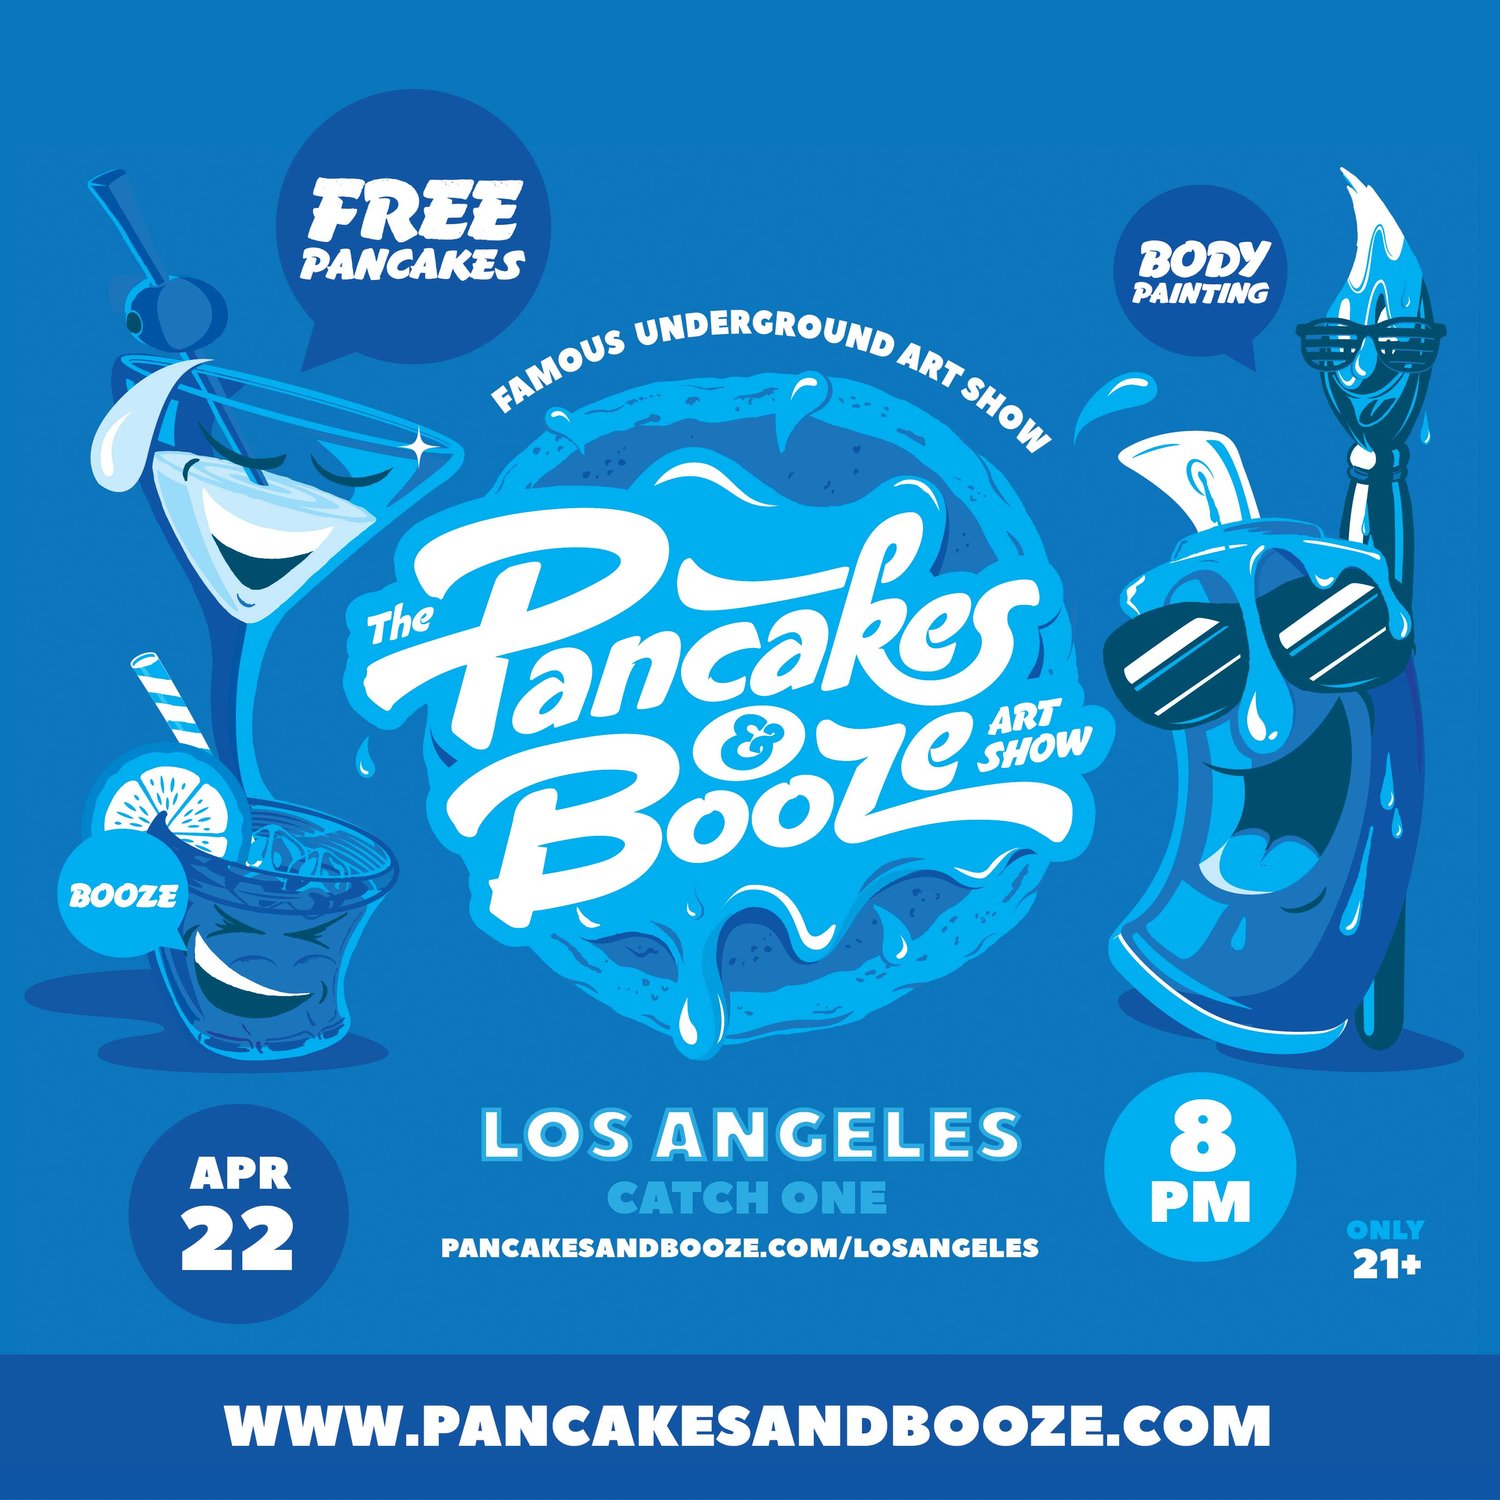 Pancakes & Booze Art Show Flyer